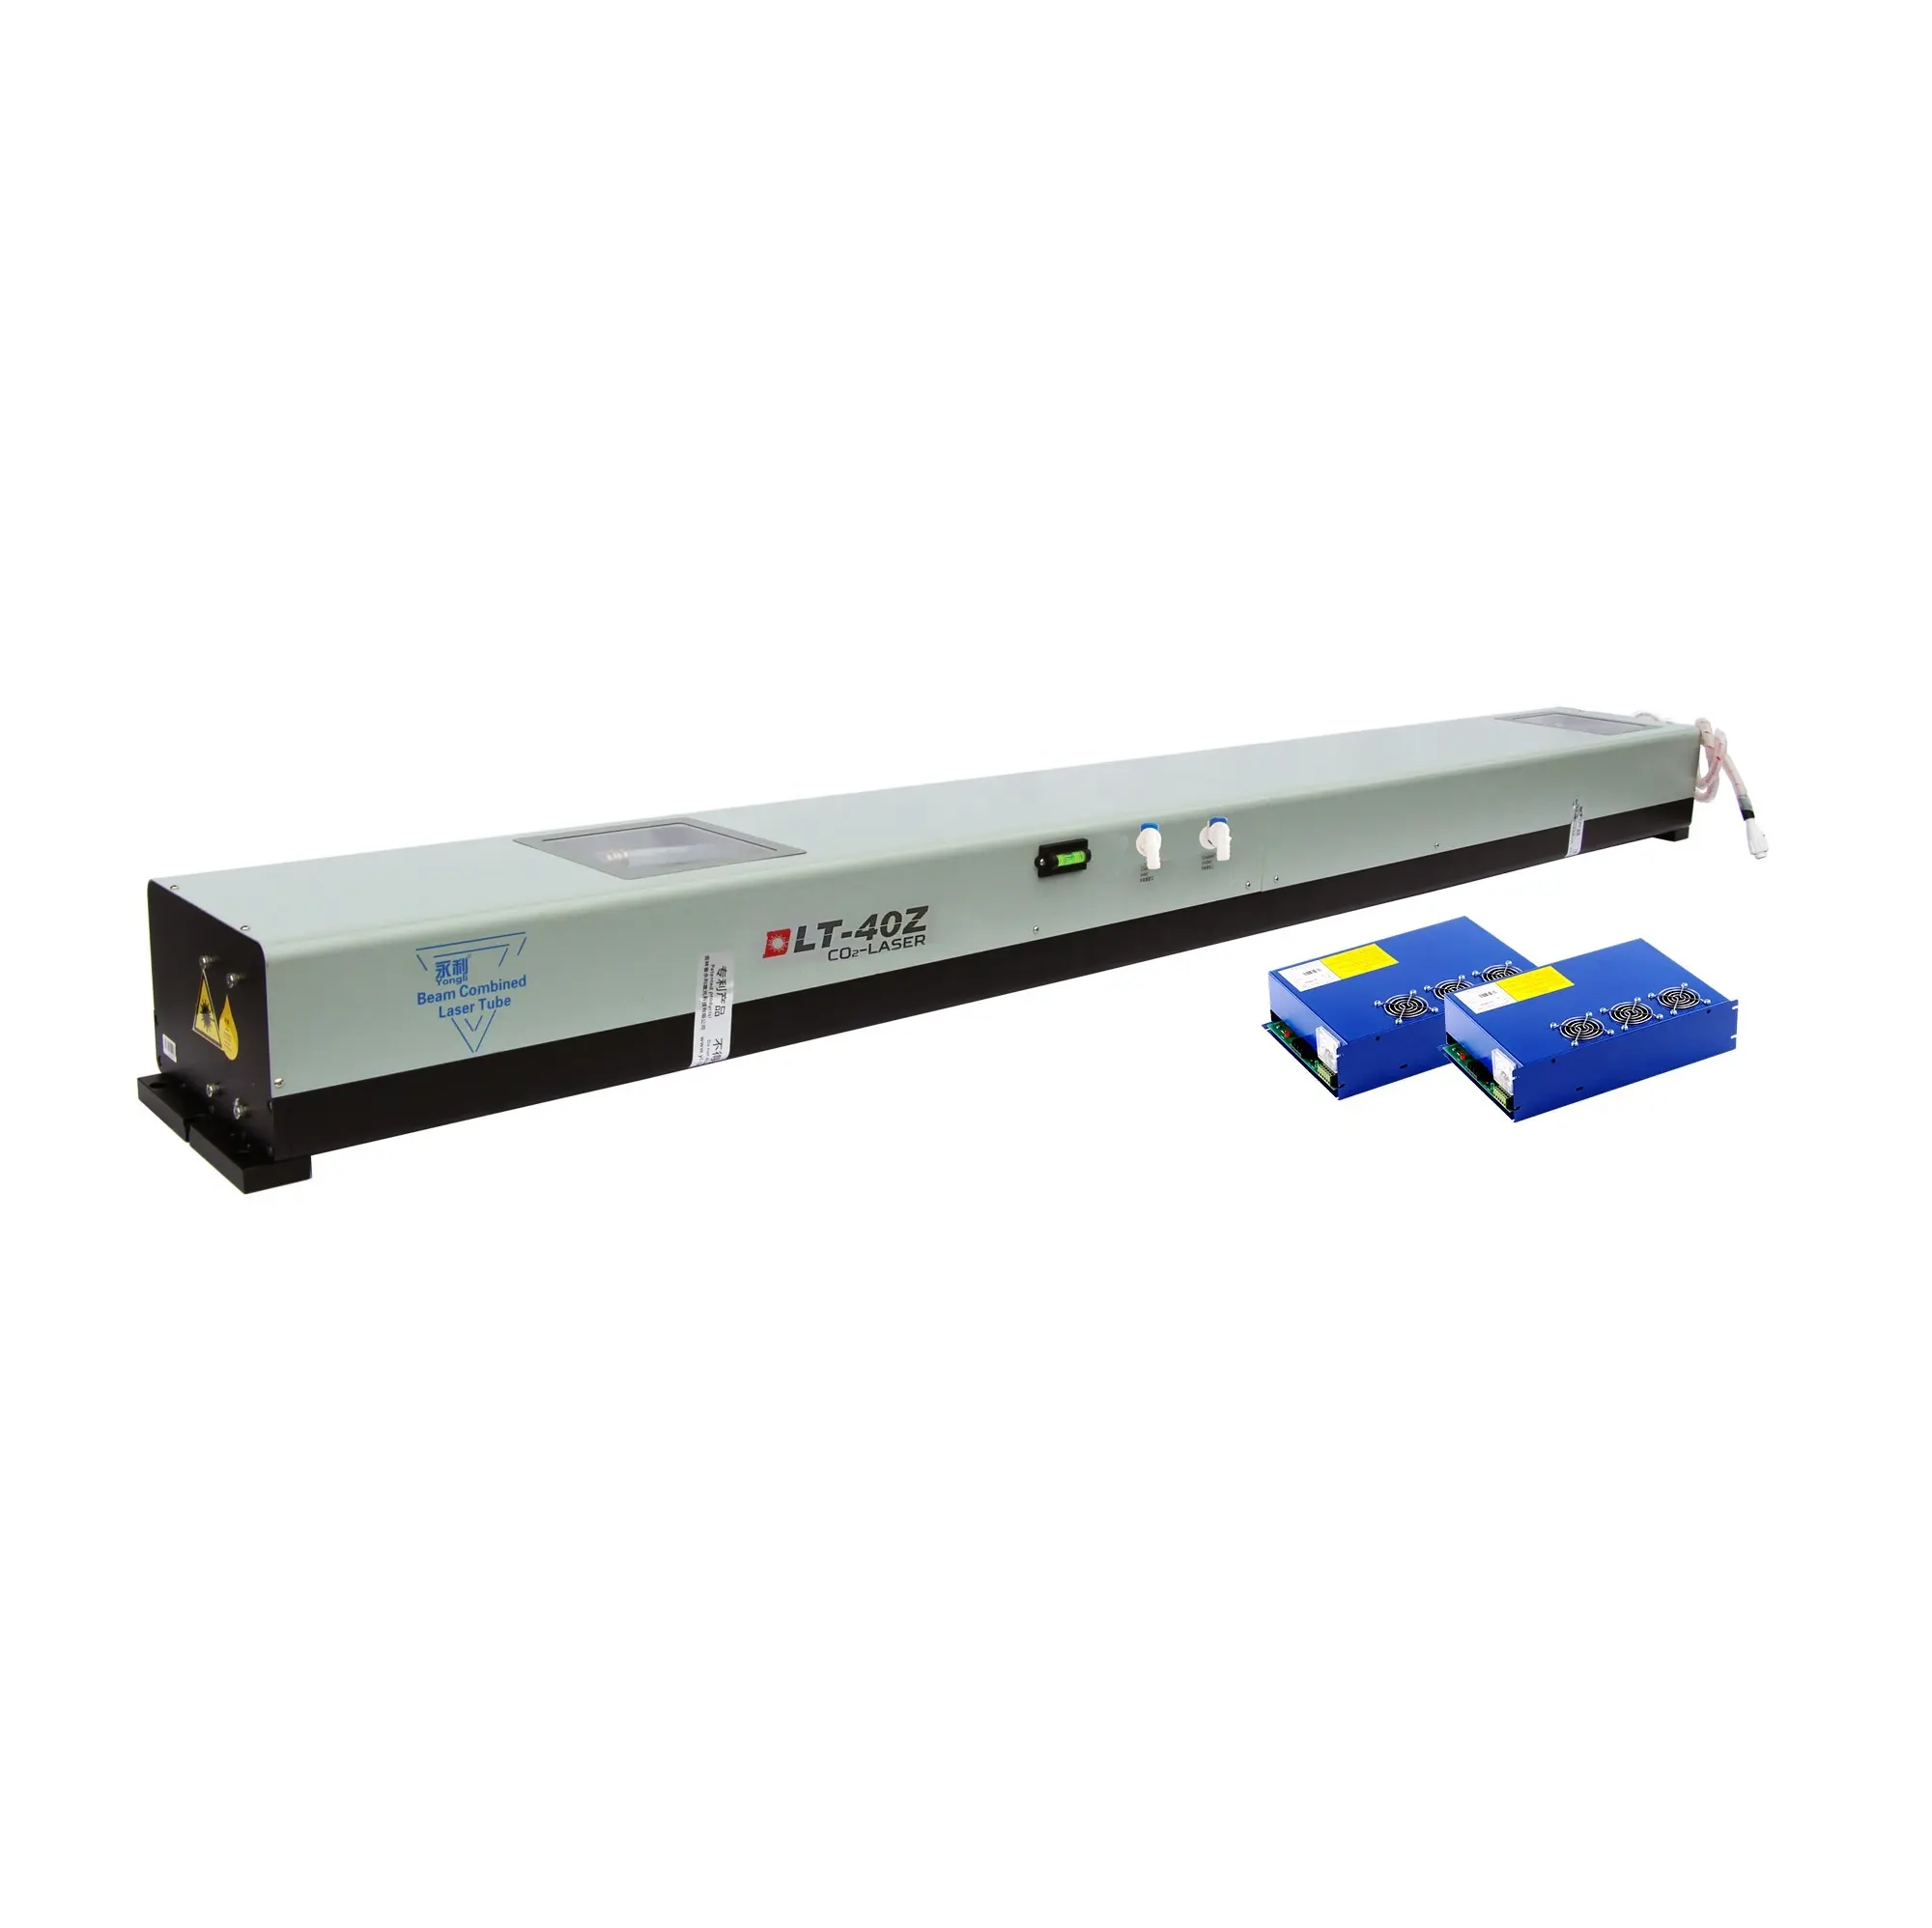 Yongli DLT-300p 200W 250w 300w 400w metal co2 laser tube for laser cutting machine